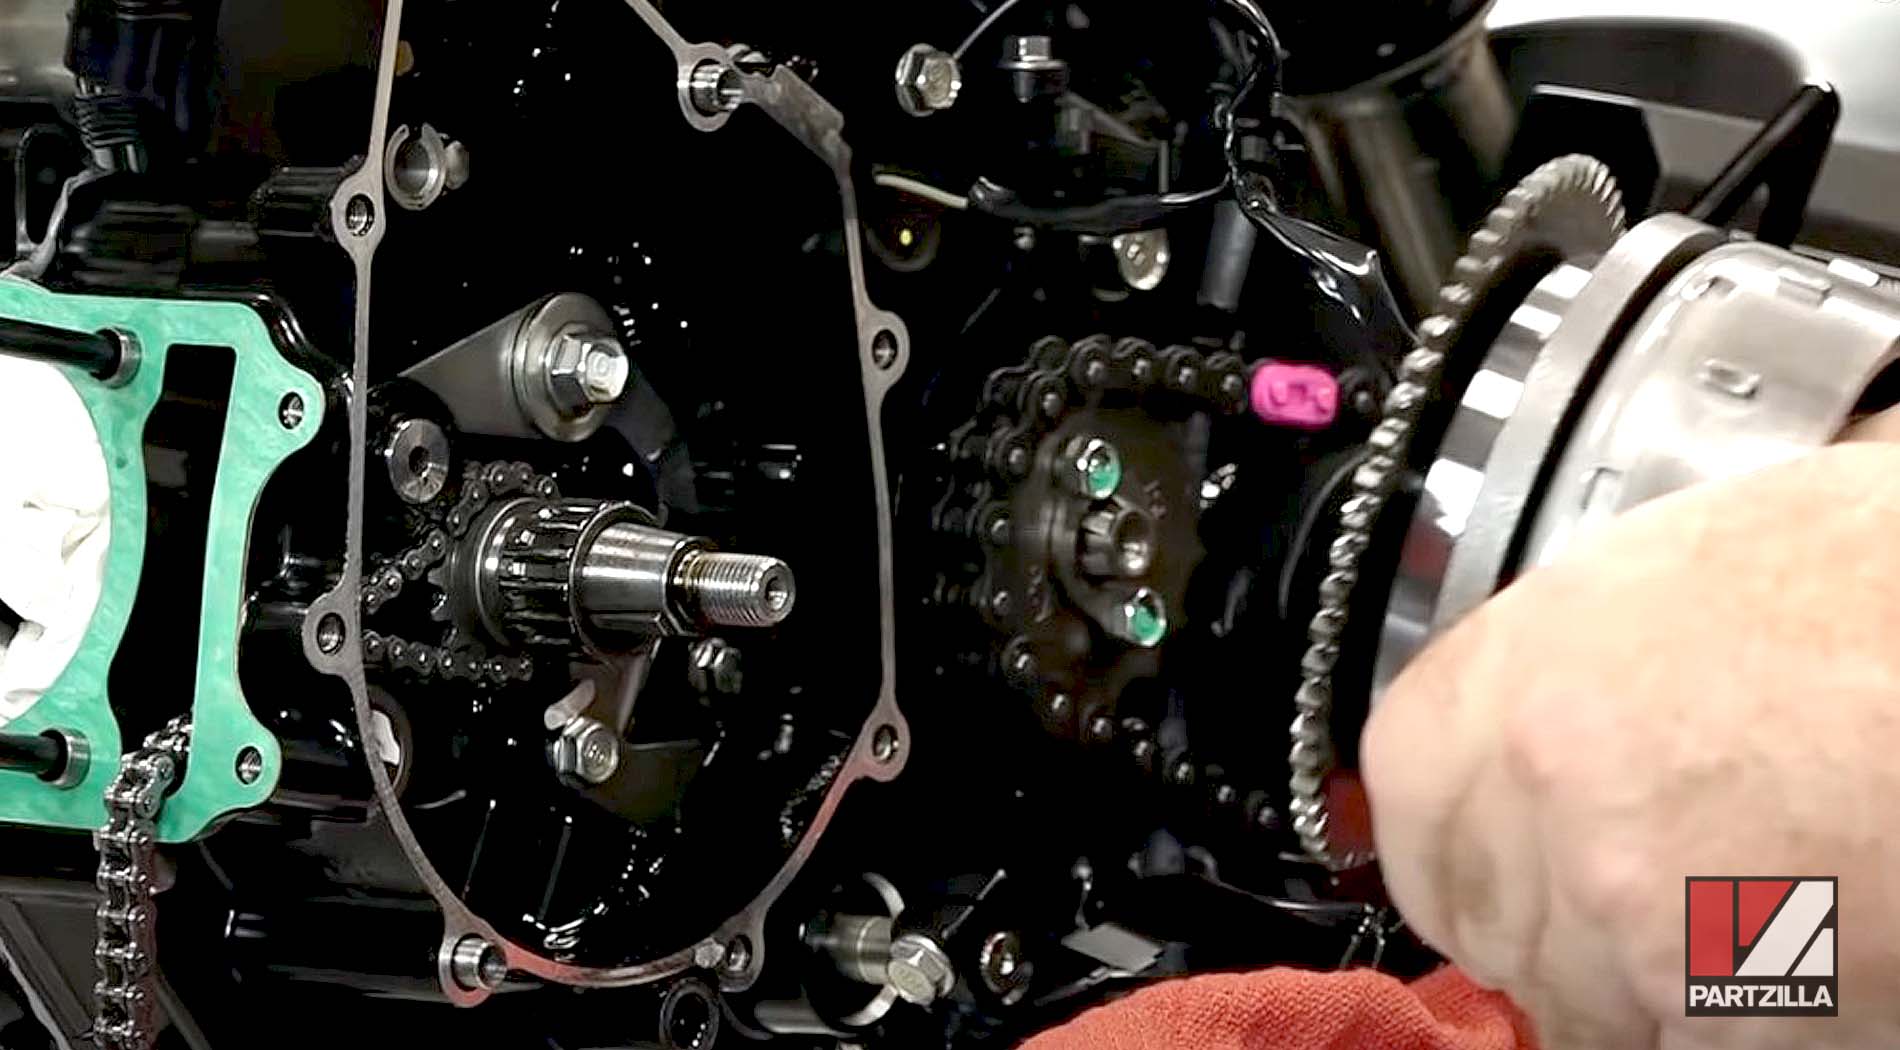 Honda Grom 125 big bore kit installation cam chain tensioner replacement